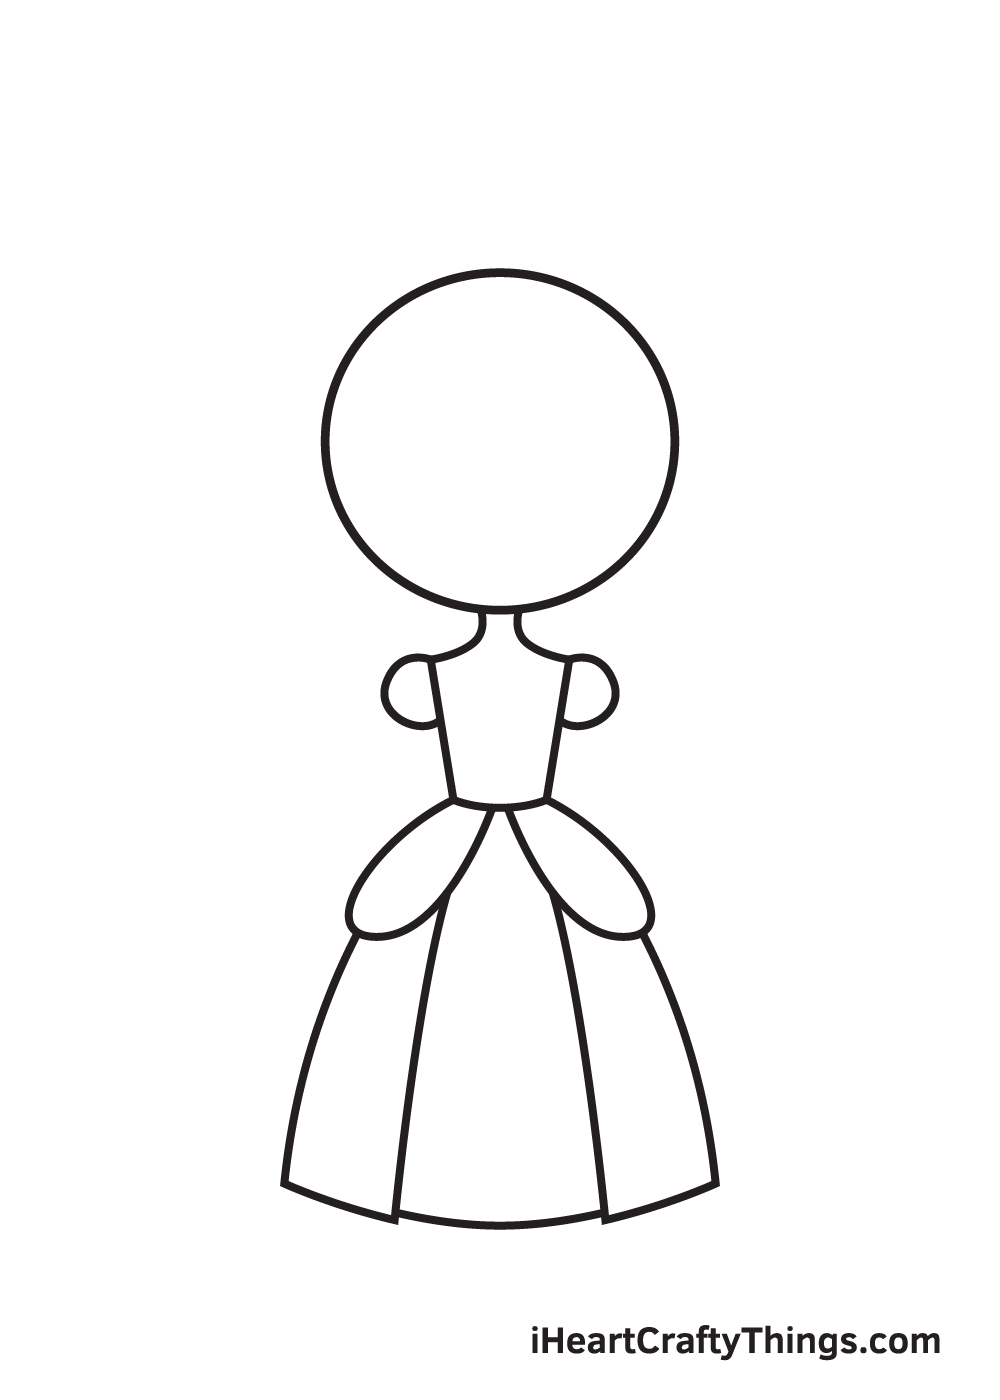 Princess Drawing – Step 5